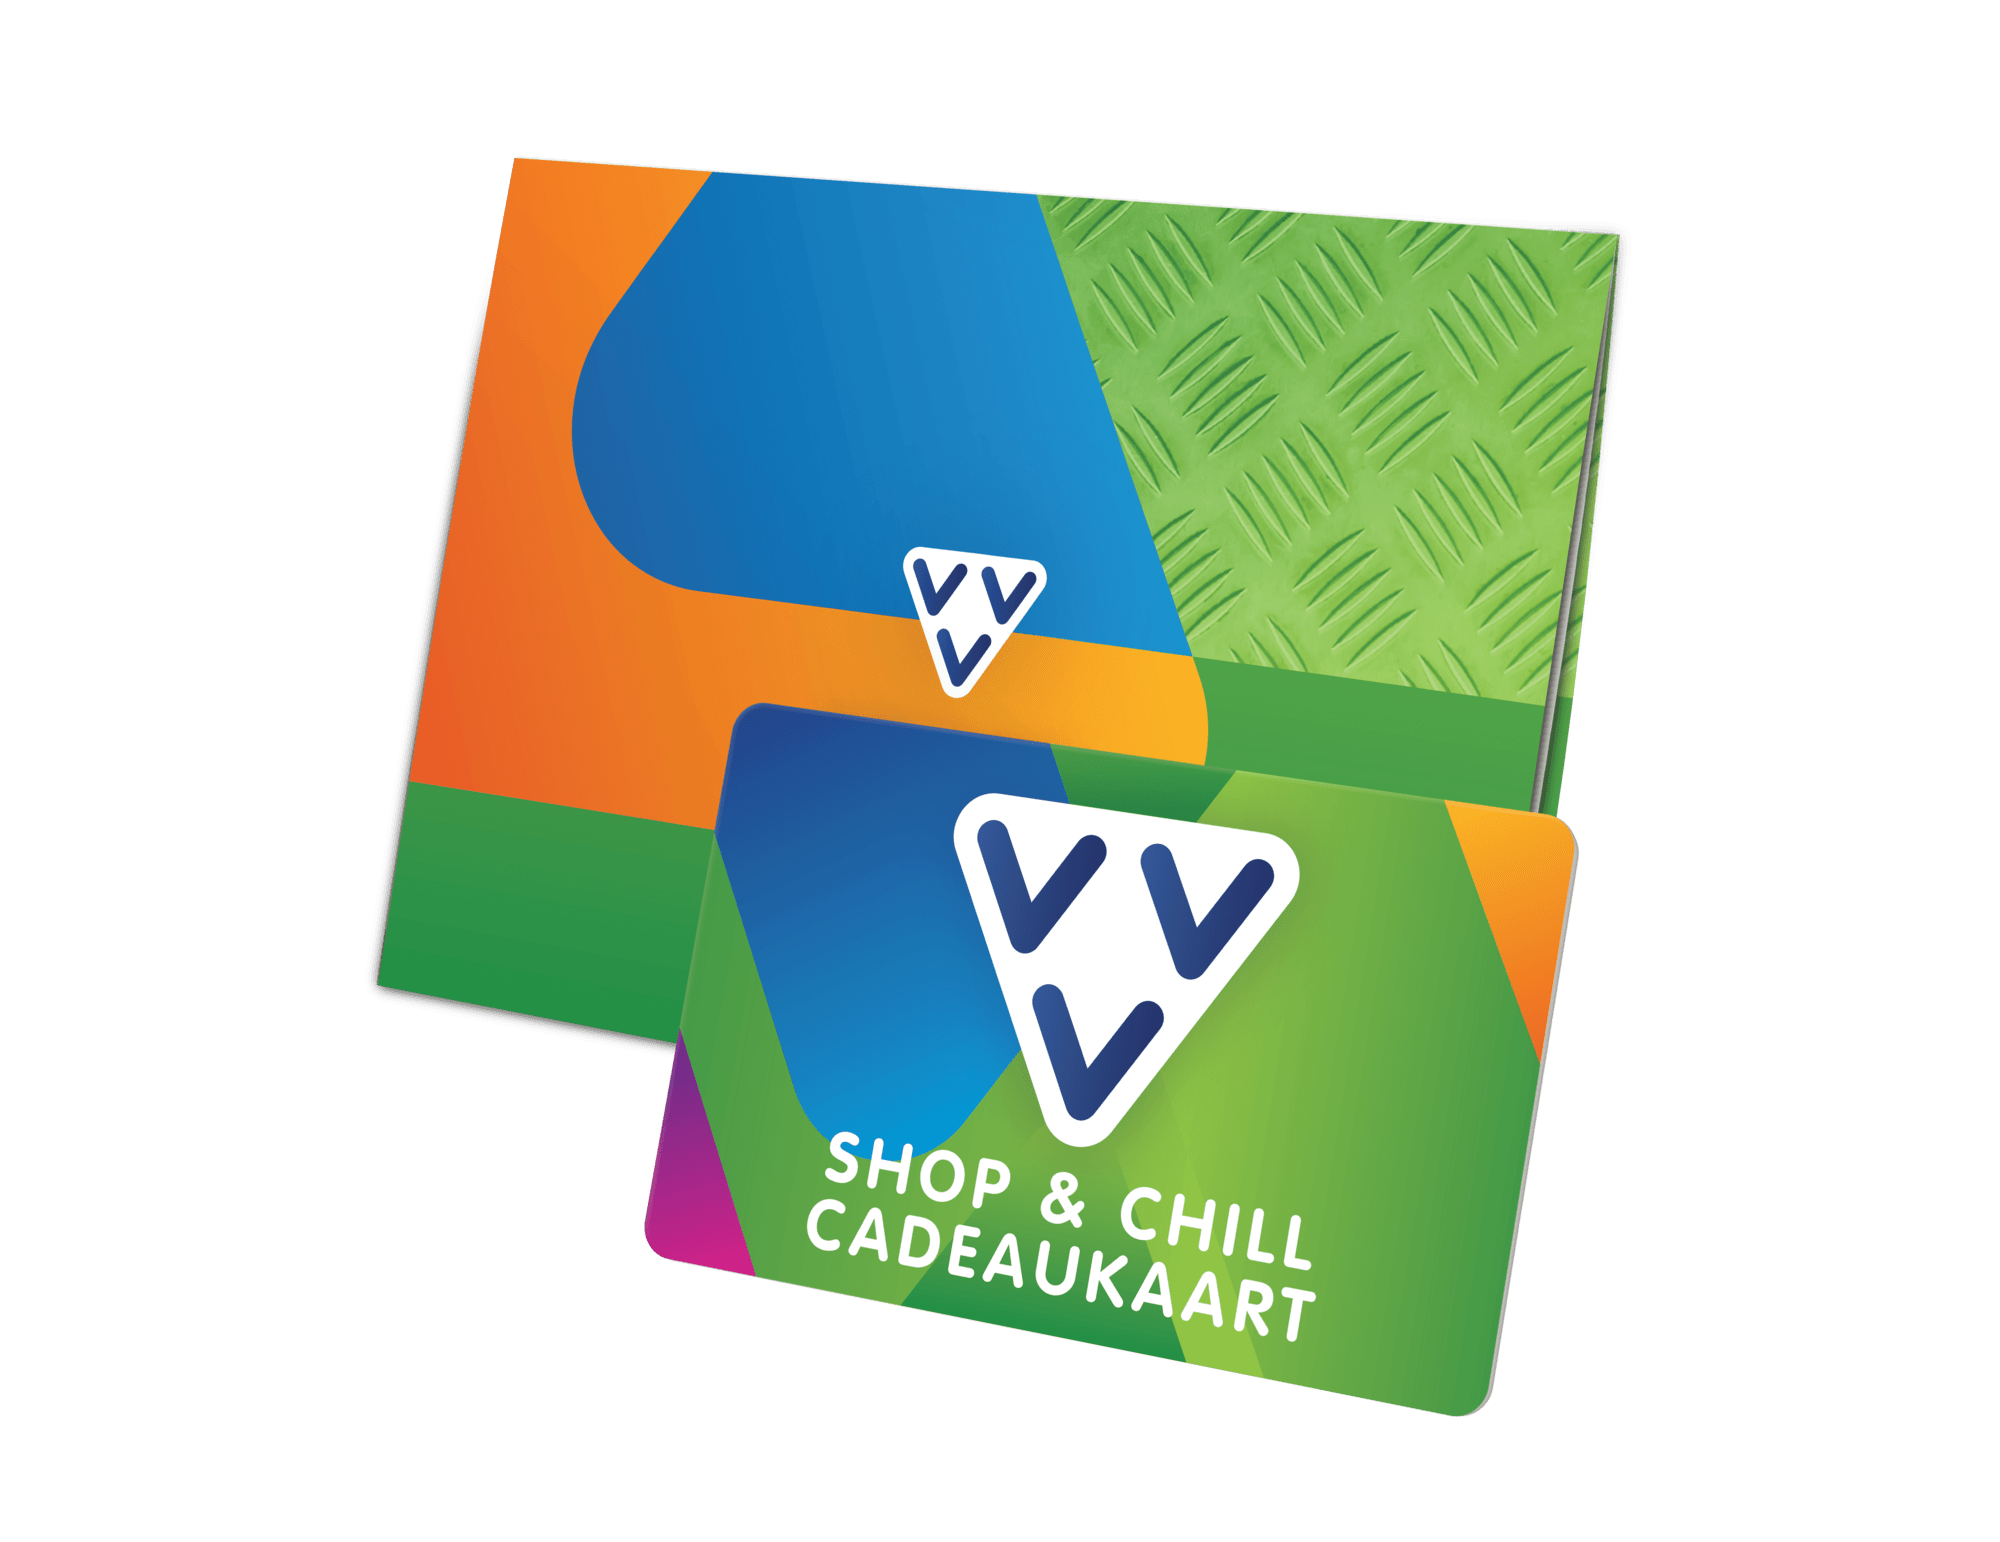 Beeldbank VVV Shop & Chill Cadeaukaart